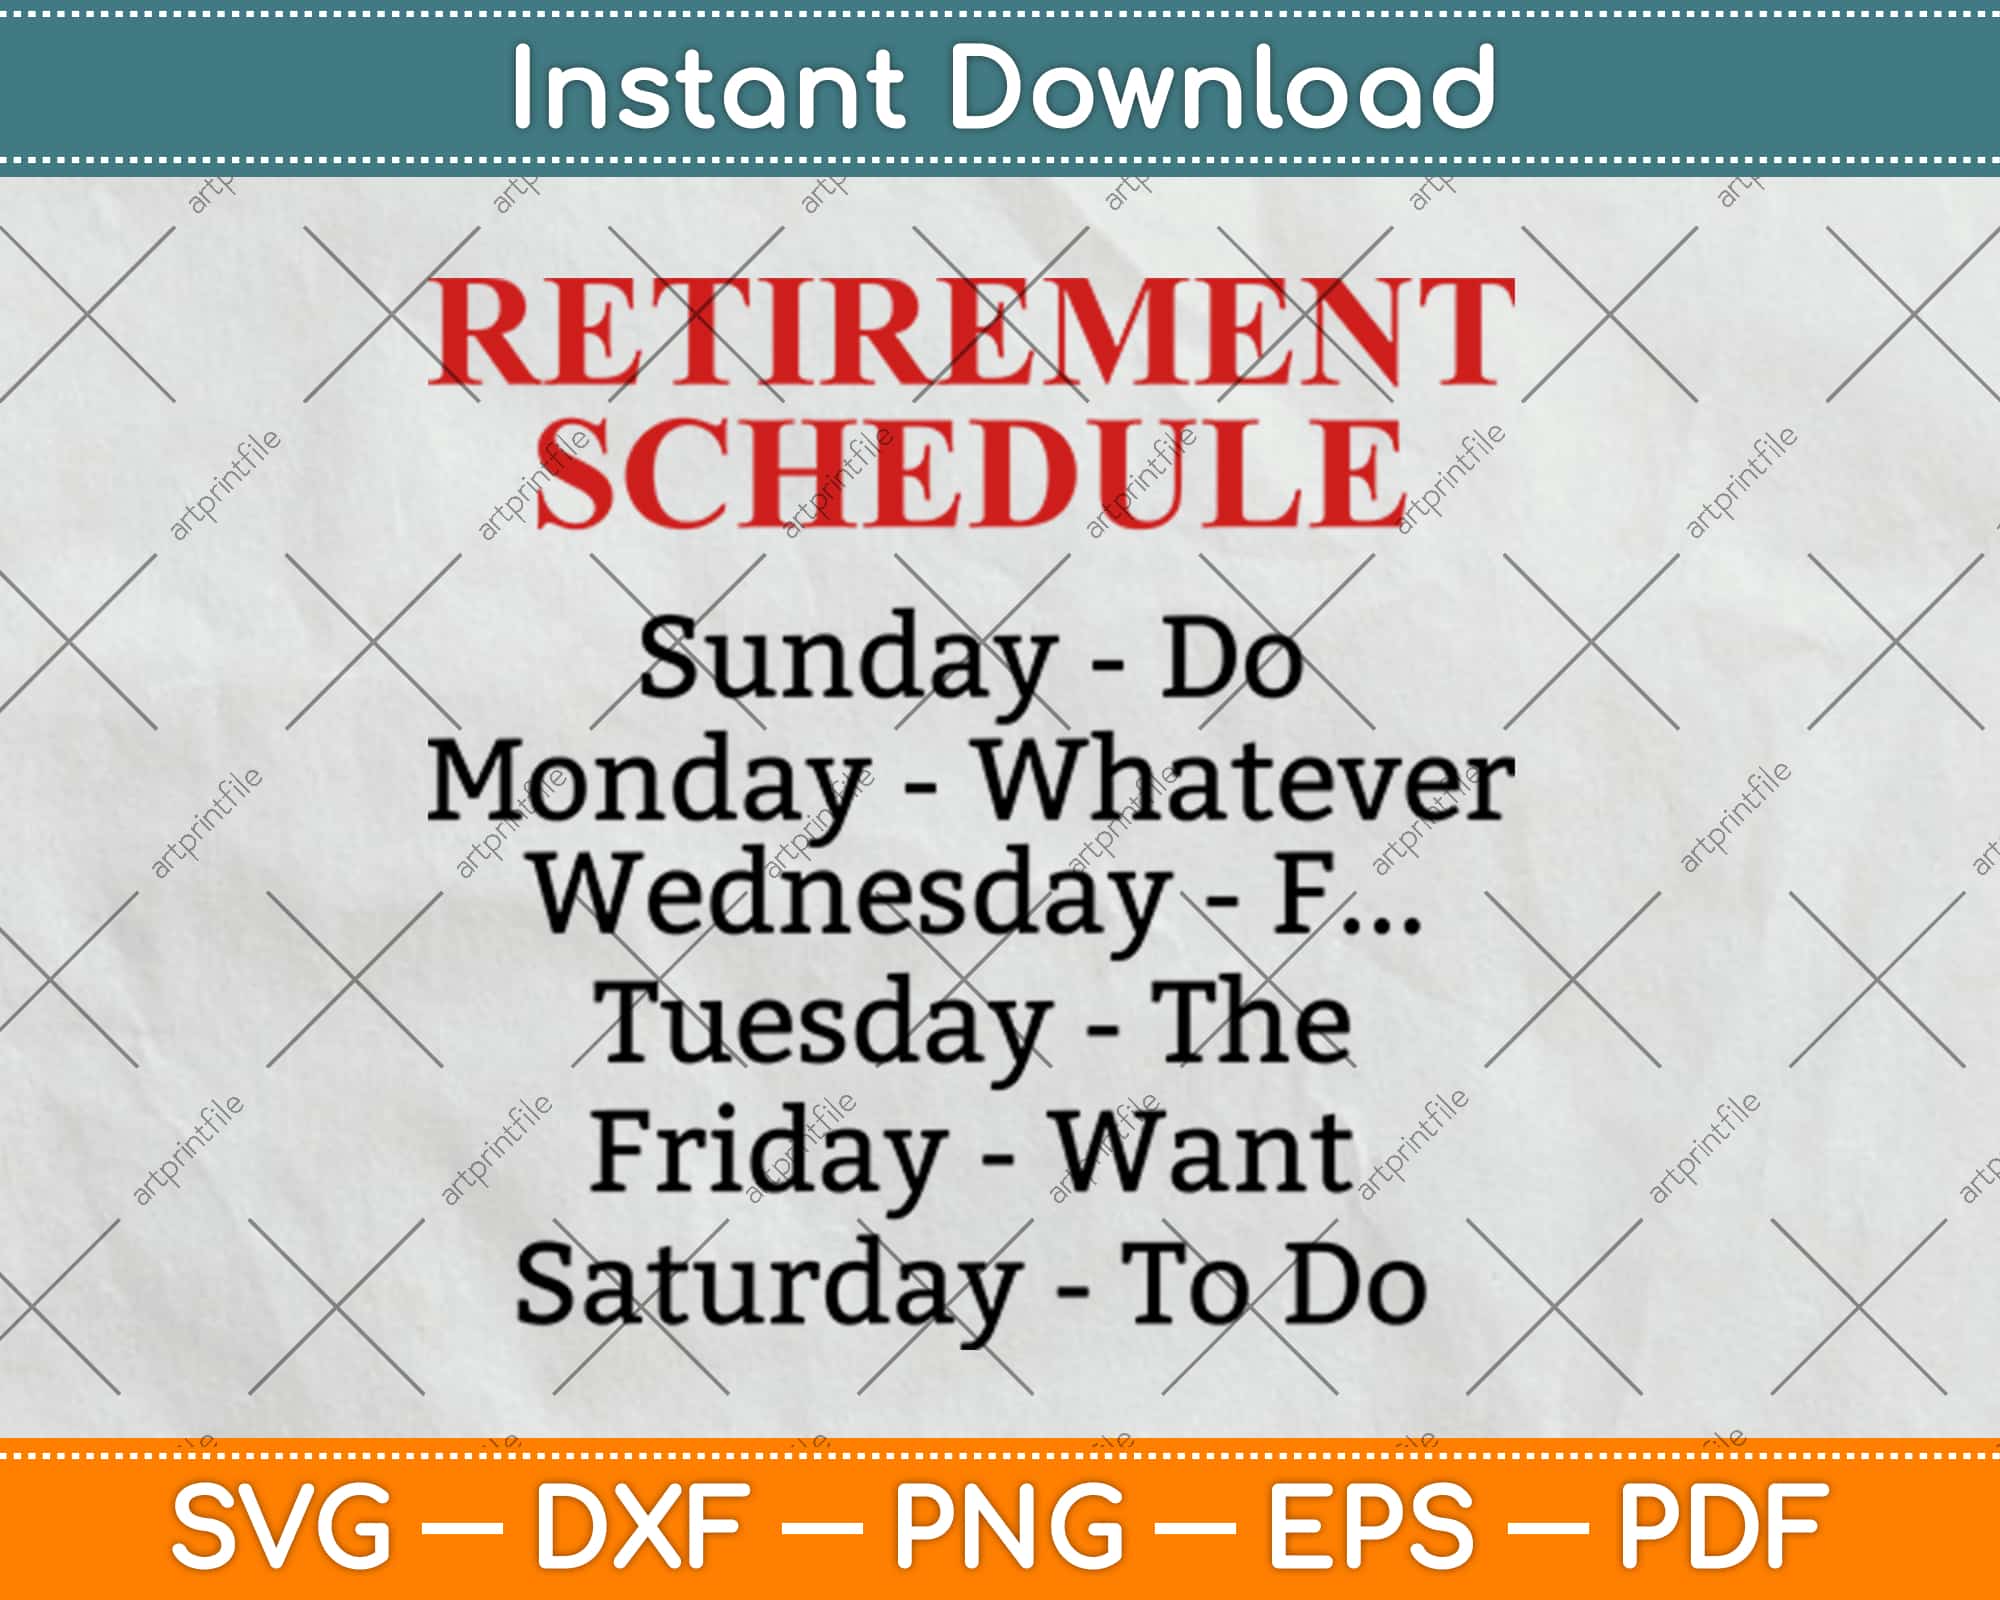 5 Unique Retirement Gift Ideas for Your Favorite Retiree